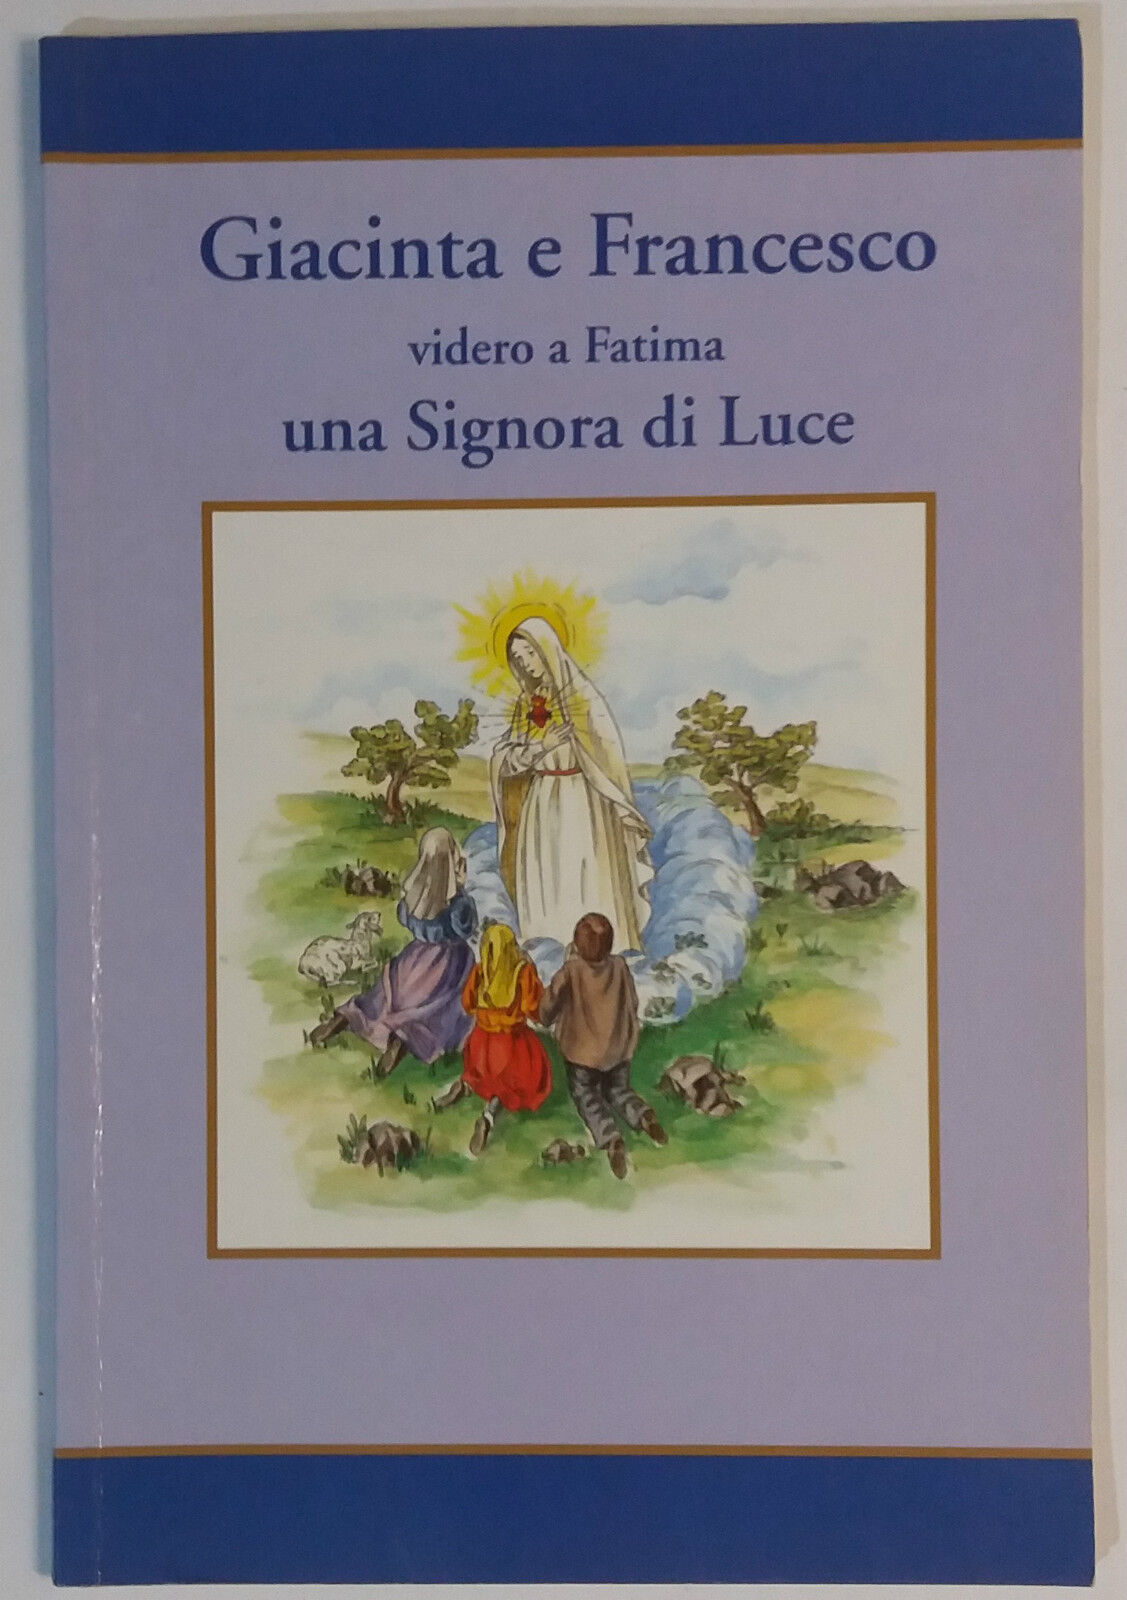 Giacinta e Francesco videro [...] - AA. VV. - Ass. Madonna di Fatima - 2003 - G